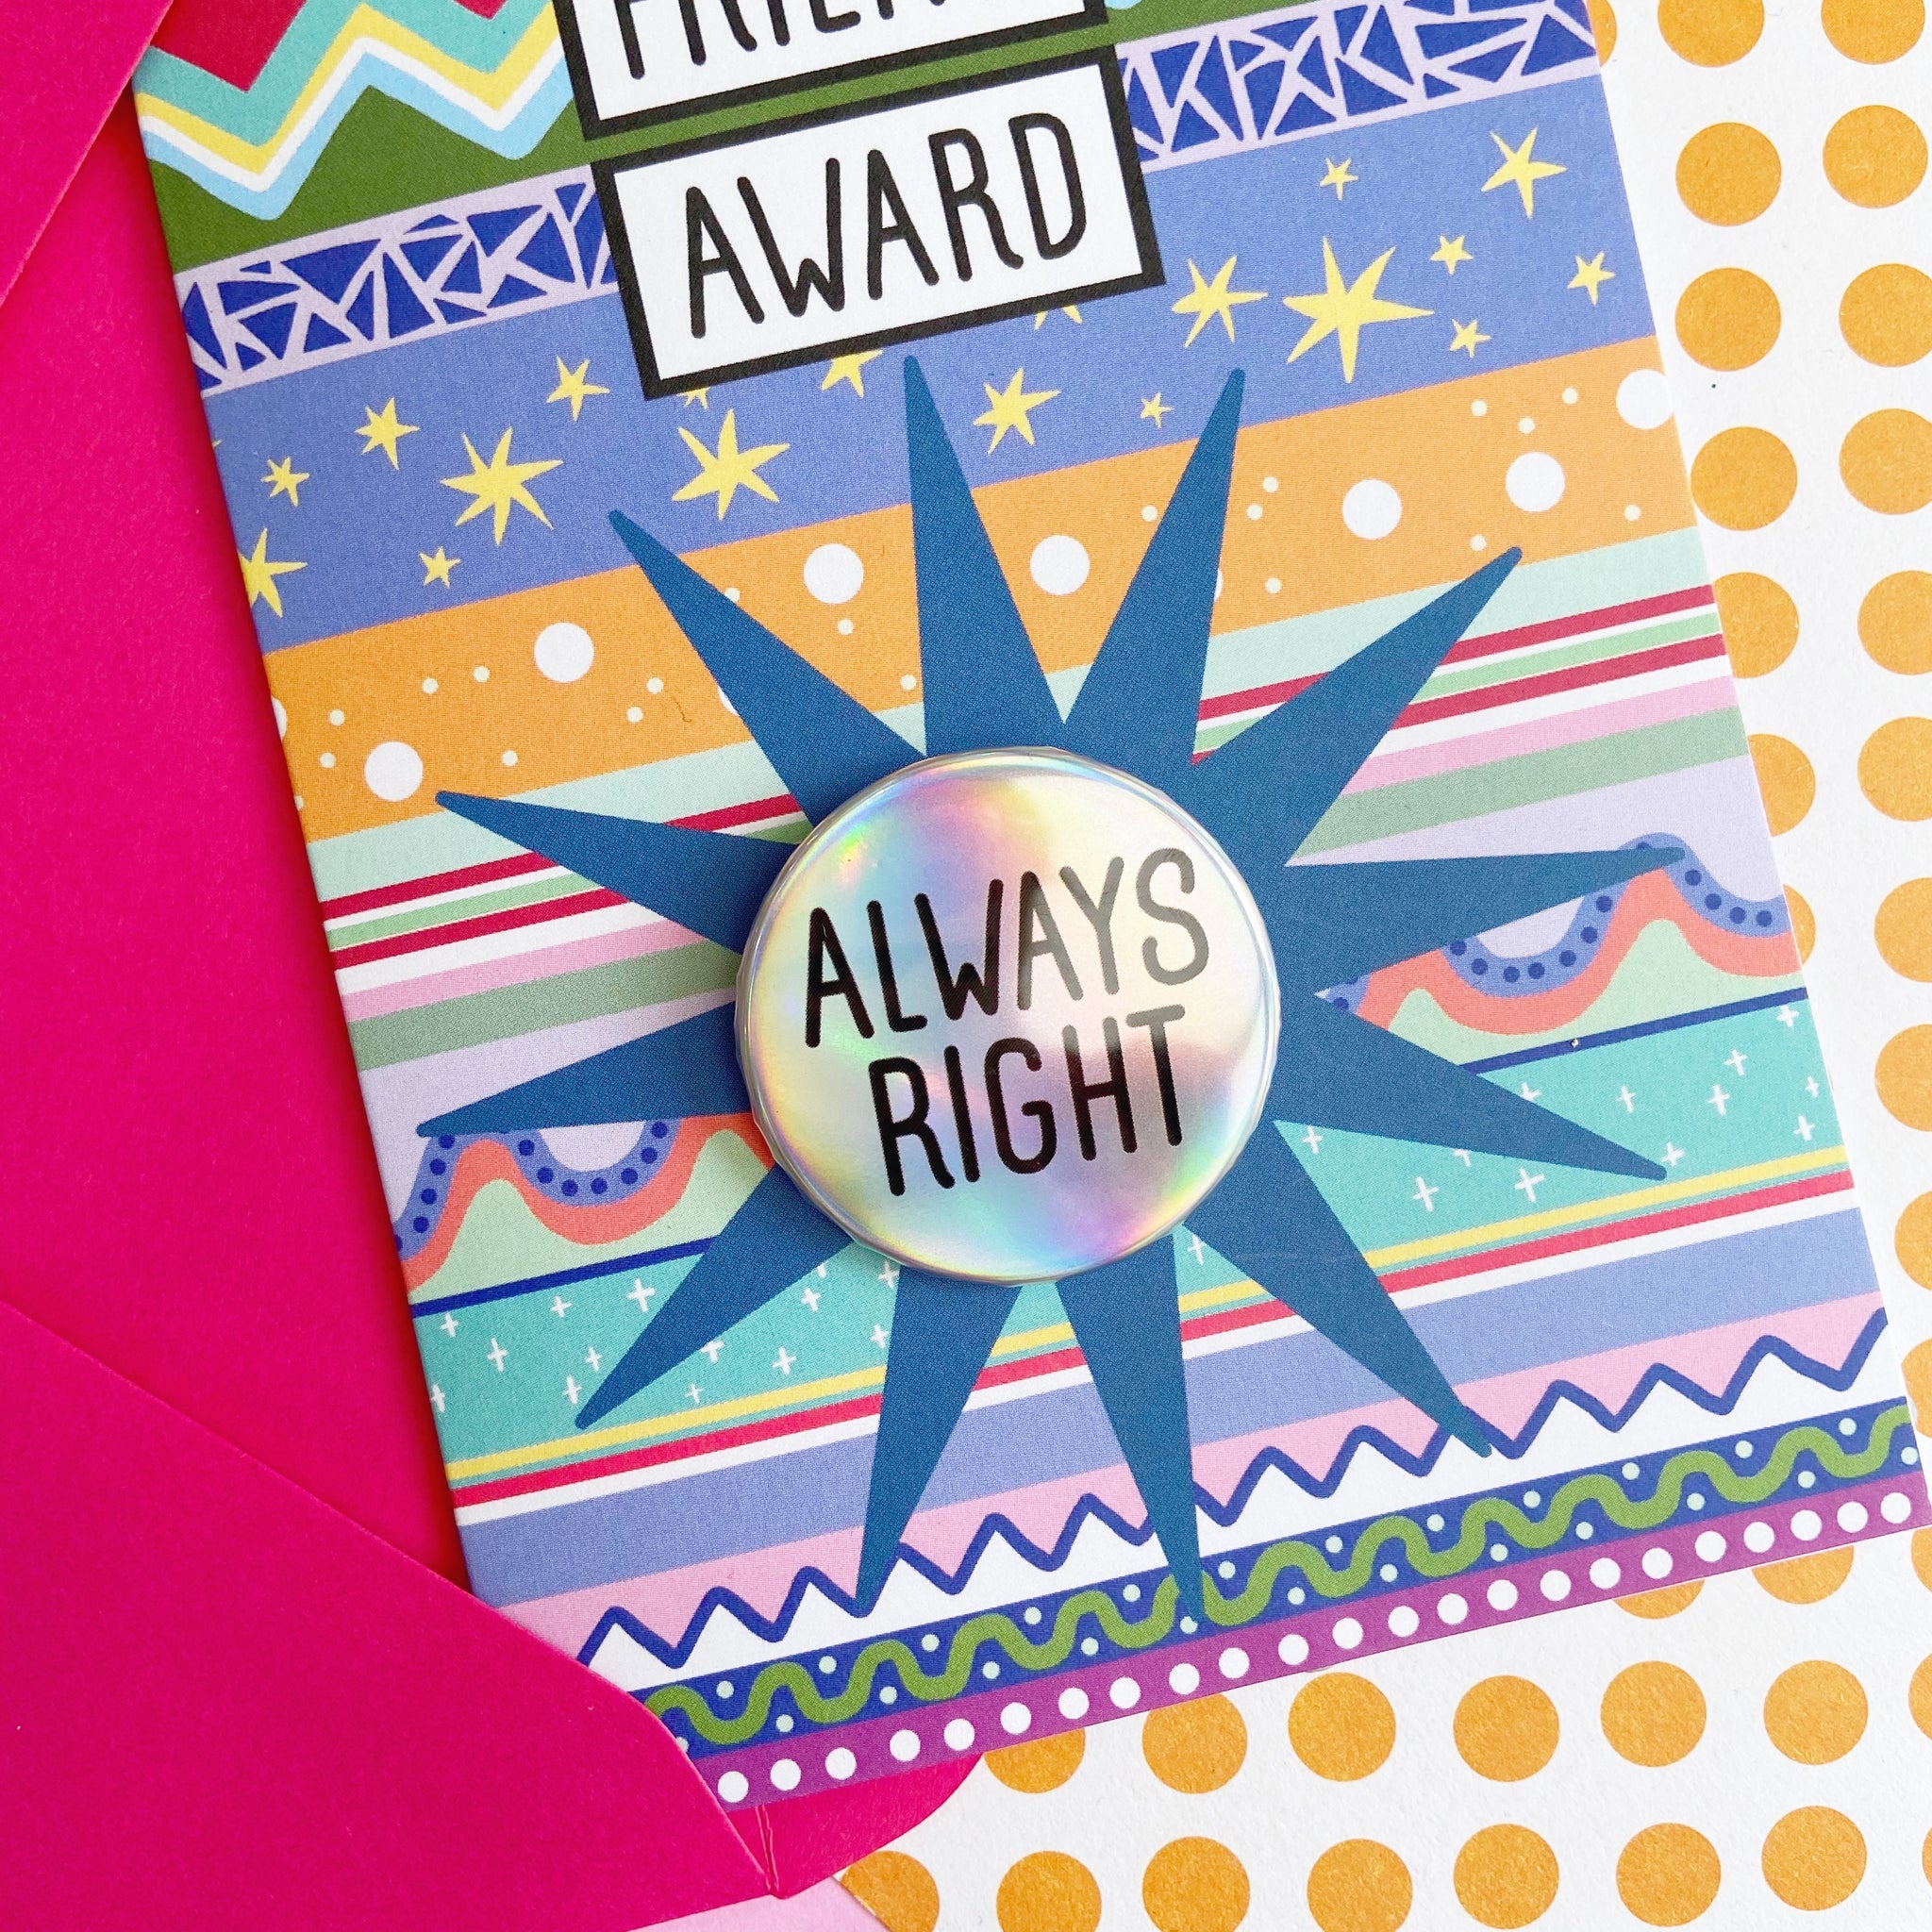 SALE Always Right - Friend Award Card